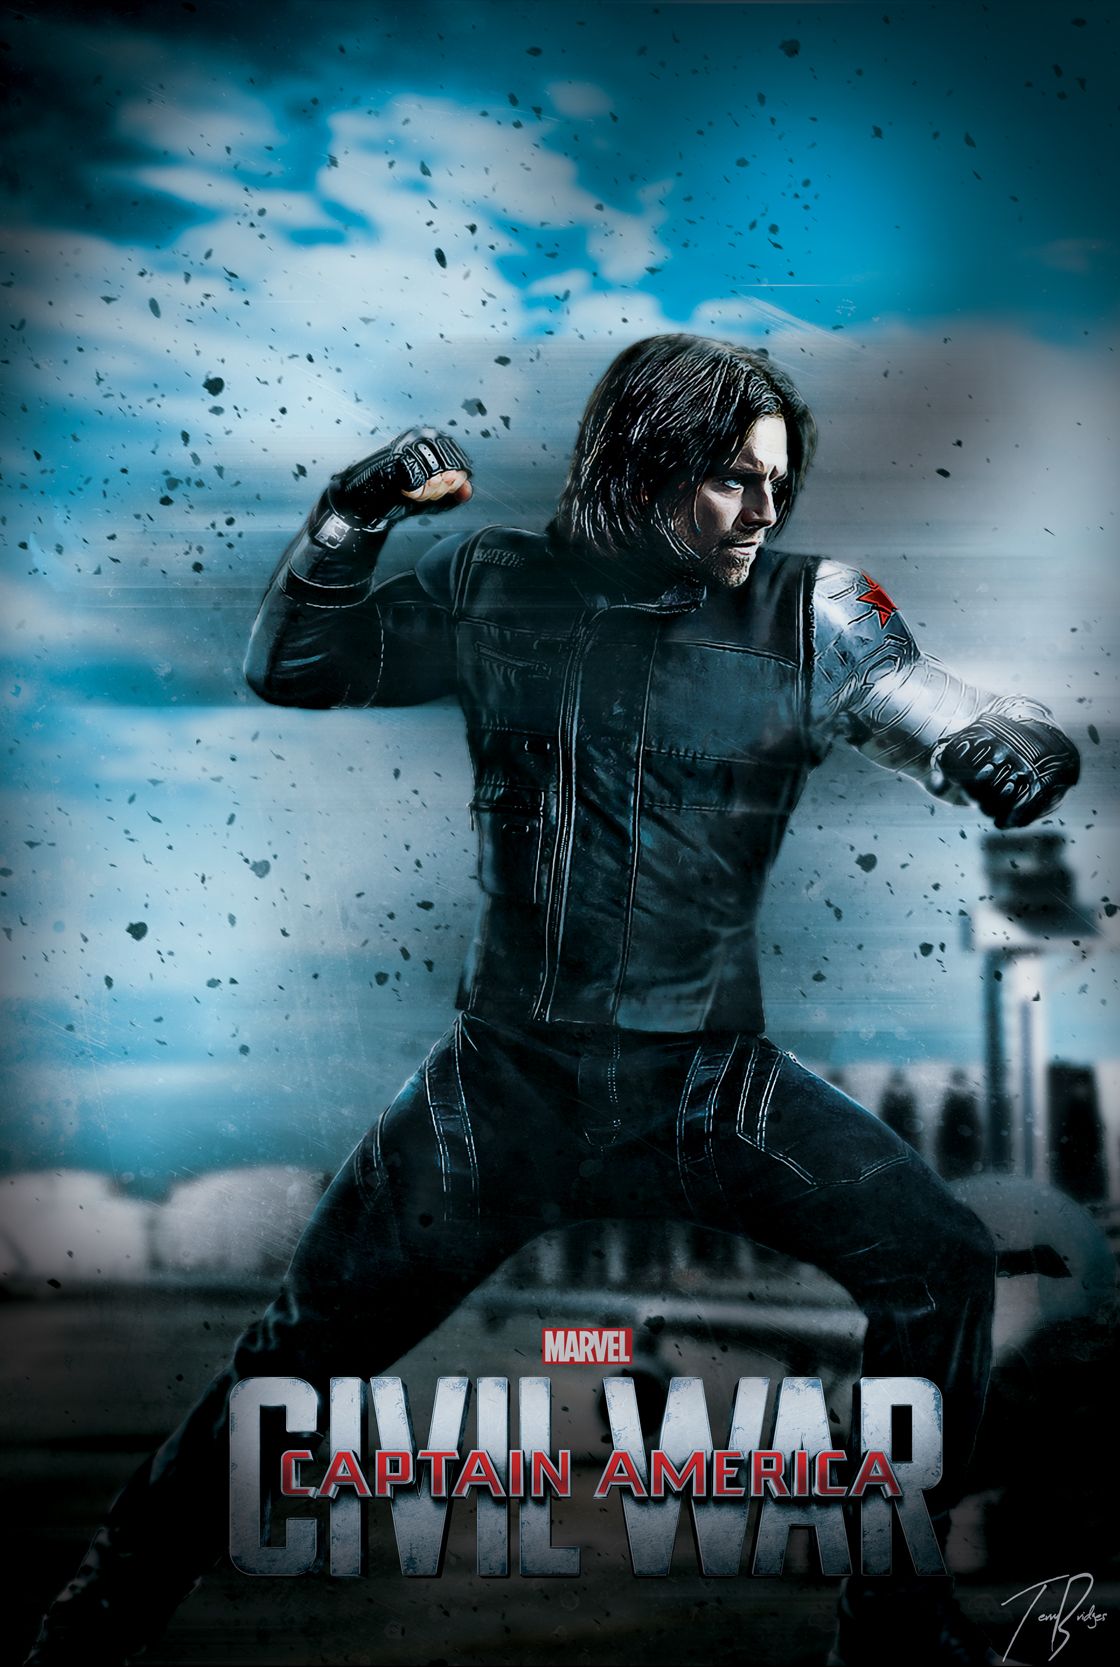 Captain America: Civil War Posters. Inspiration. Graphic Design Junction